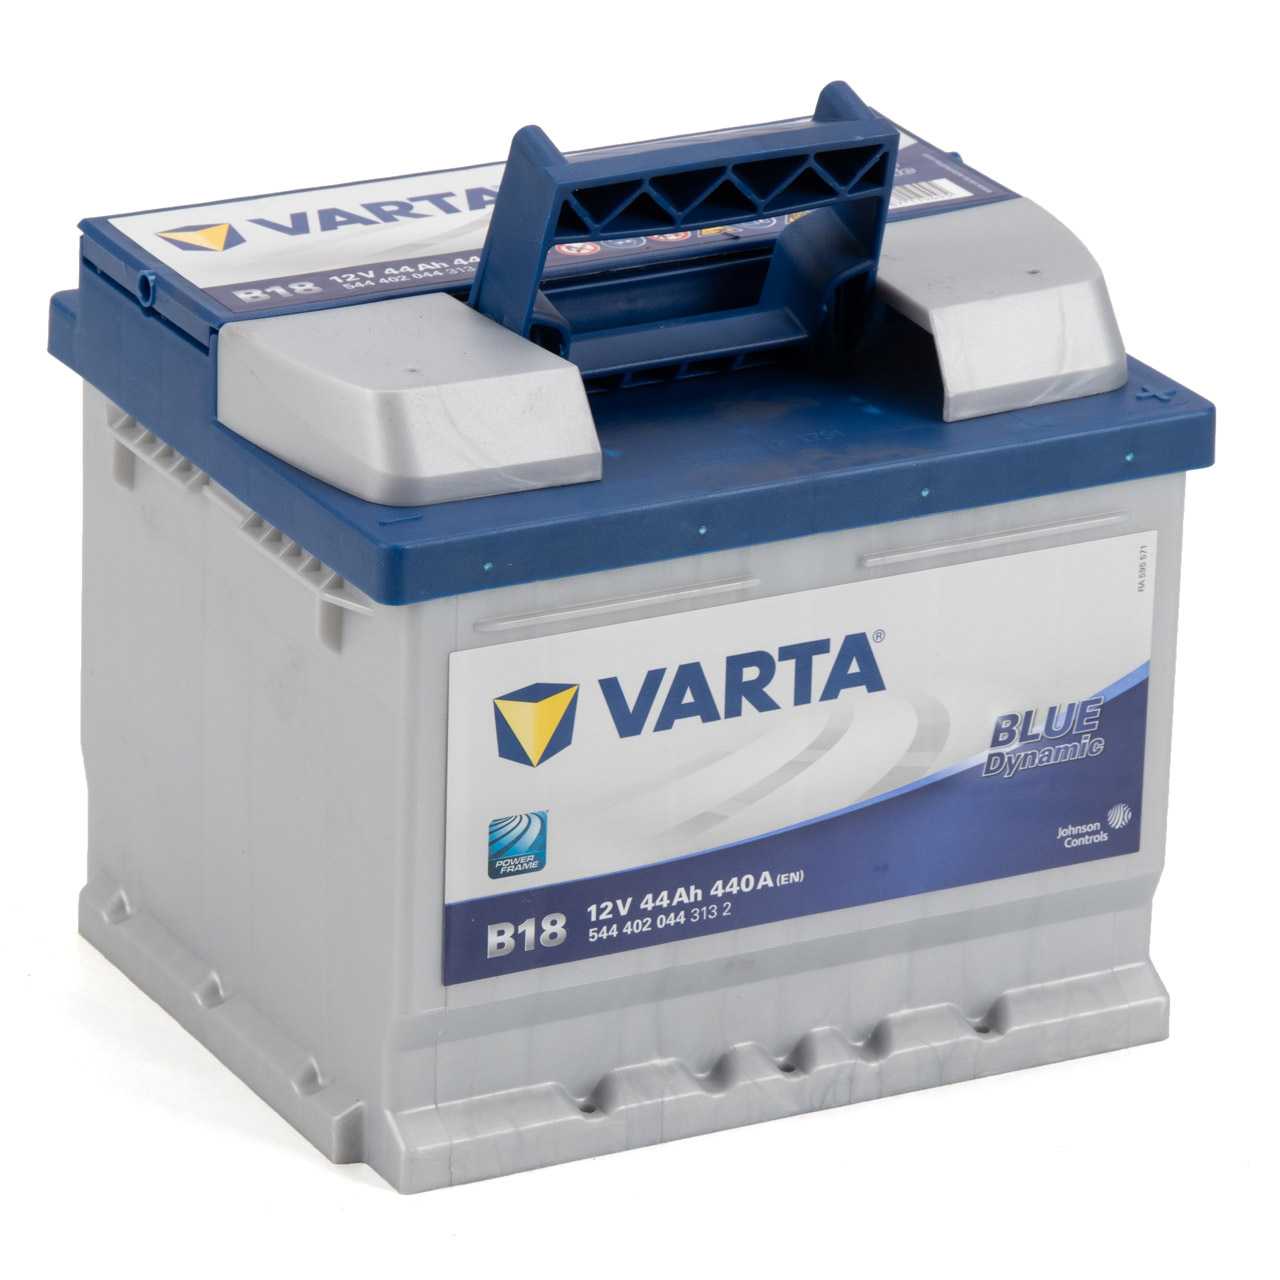 VARTA BLUE dynamic B18 Autobatterie Batterie Starterbatterie 12V 44Ah 440A